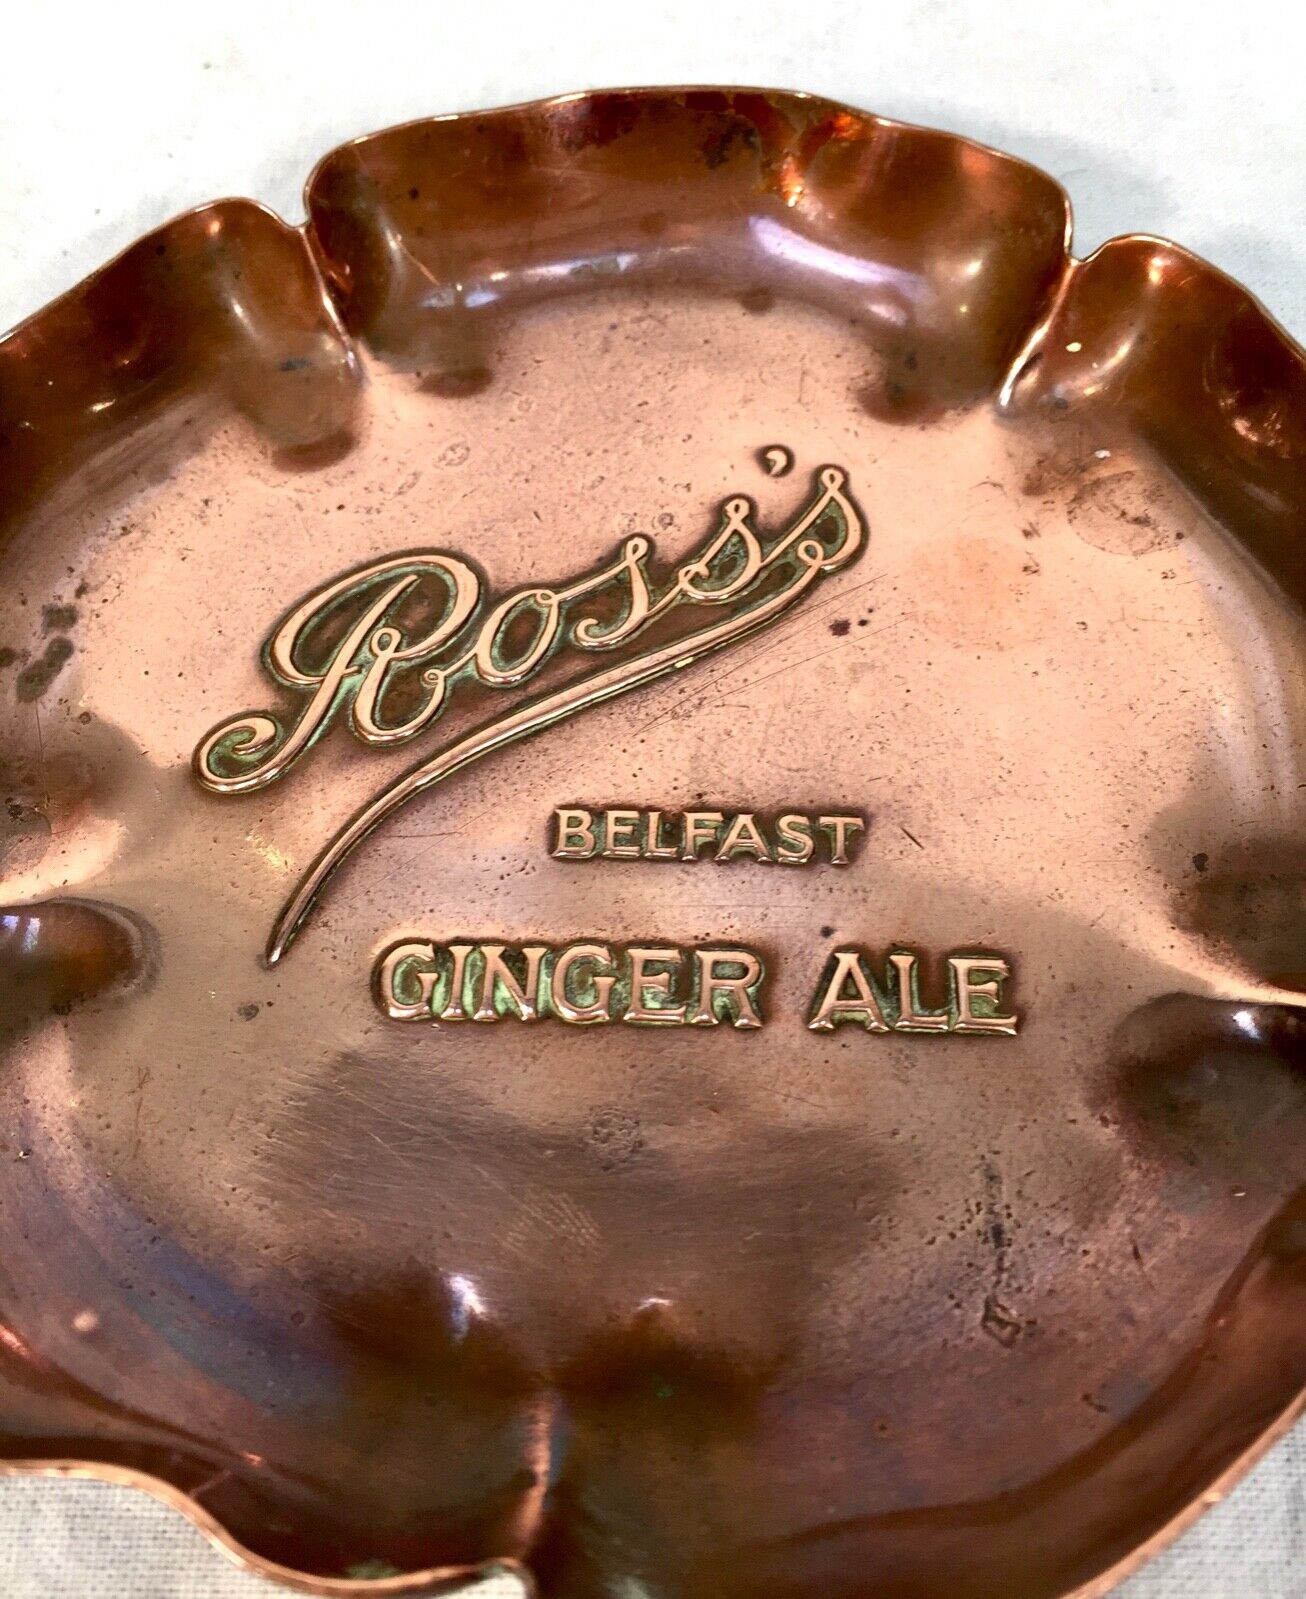 Antique Advertising - Copper Pub Ashtray / Dish for Ross's Belfast Ginger Beer